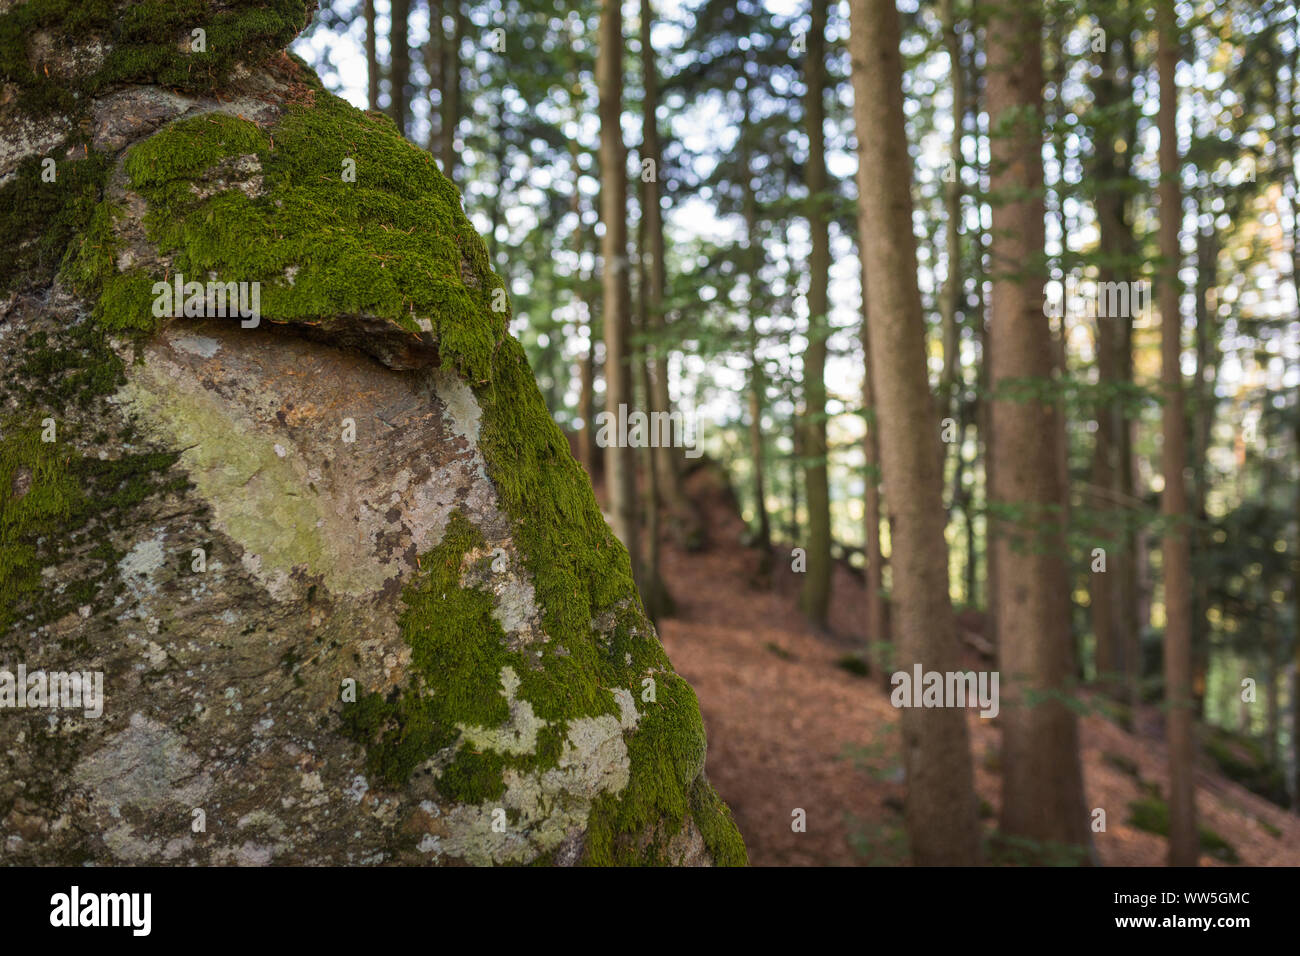 Rock gathering moss in forest 'Bayerischer Wald', Bavaria, Germany Stock Photo